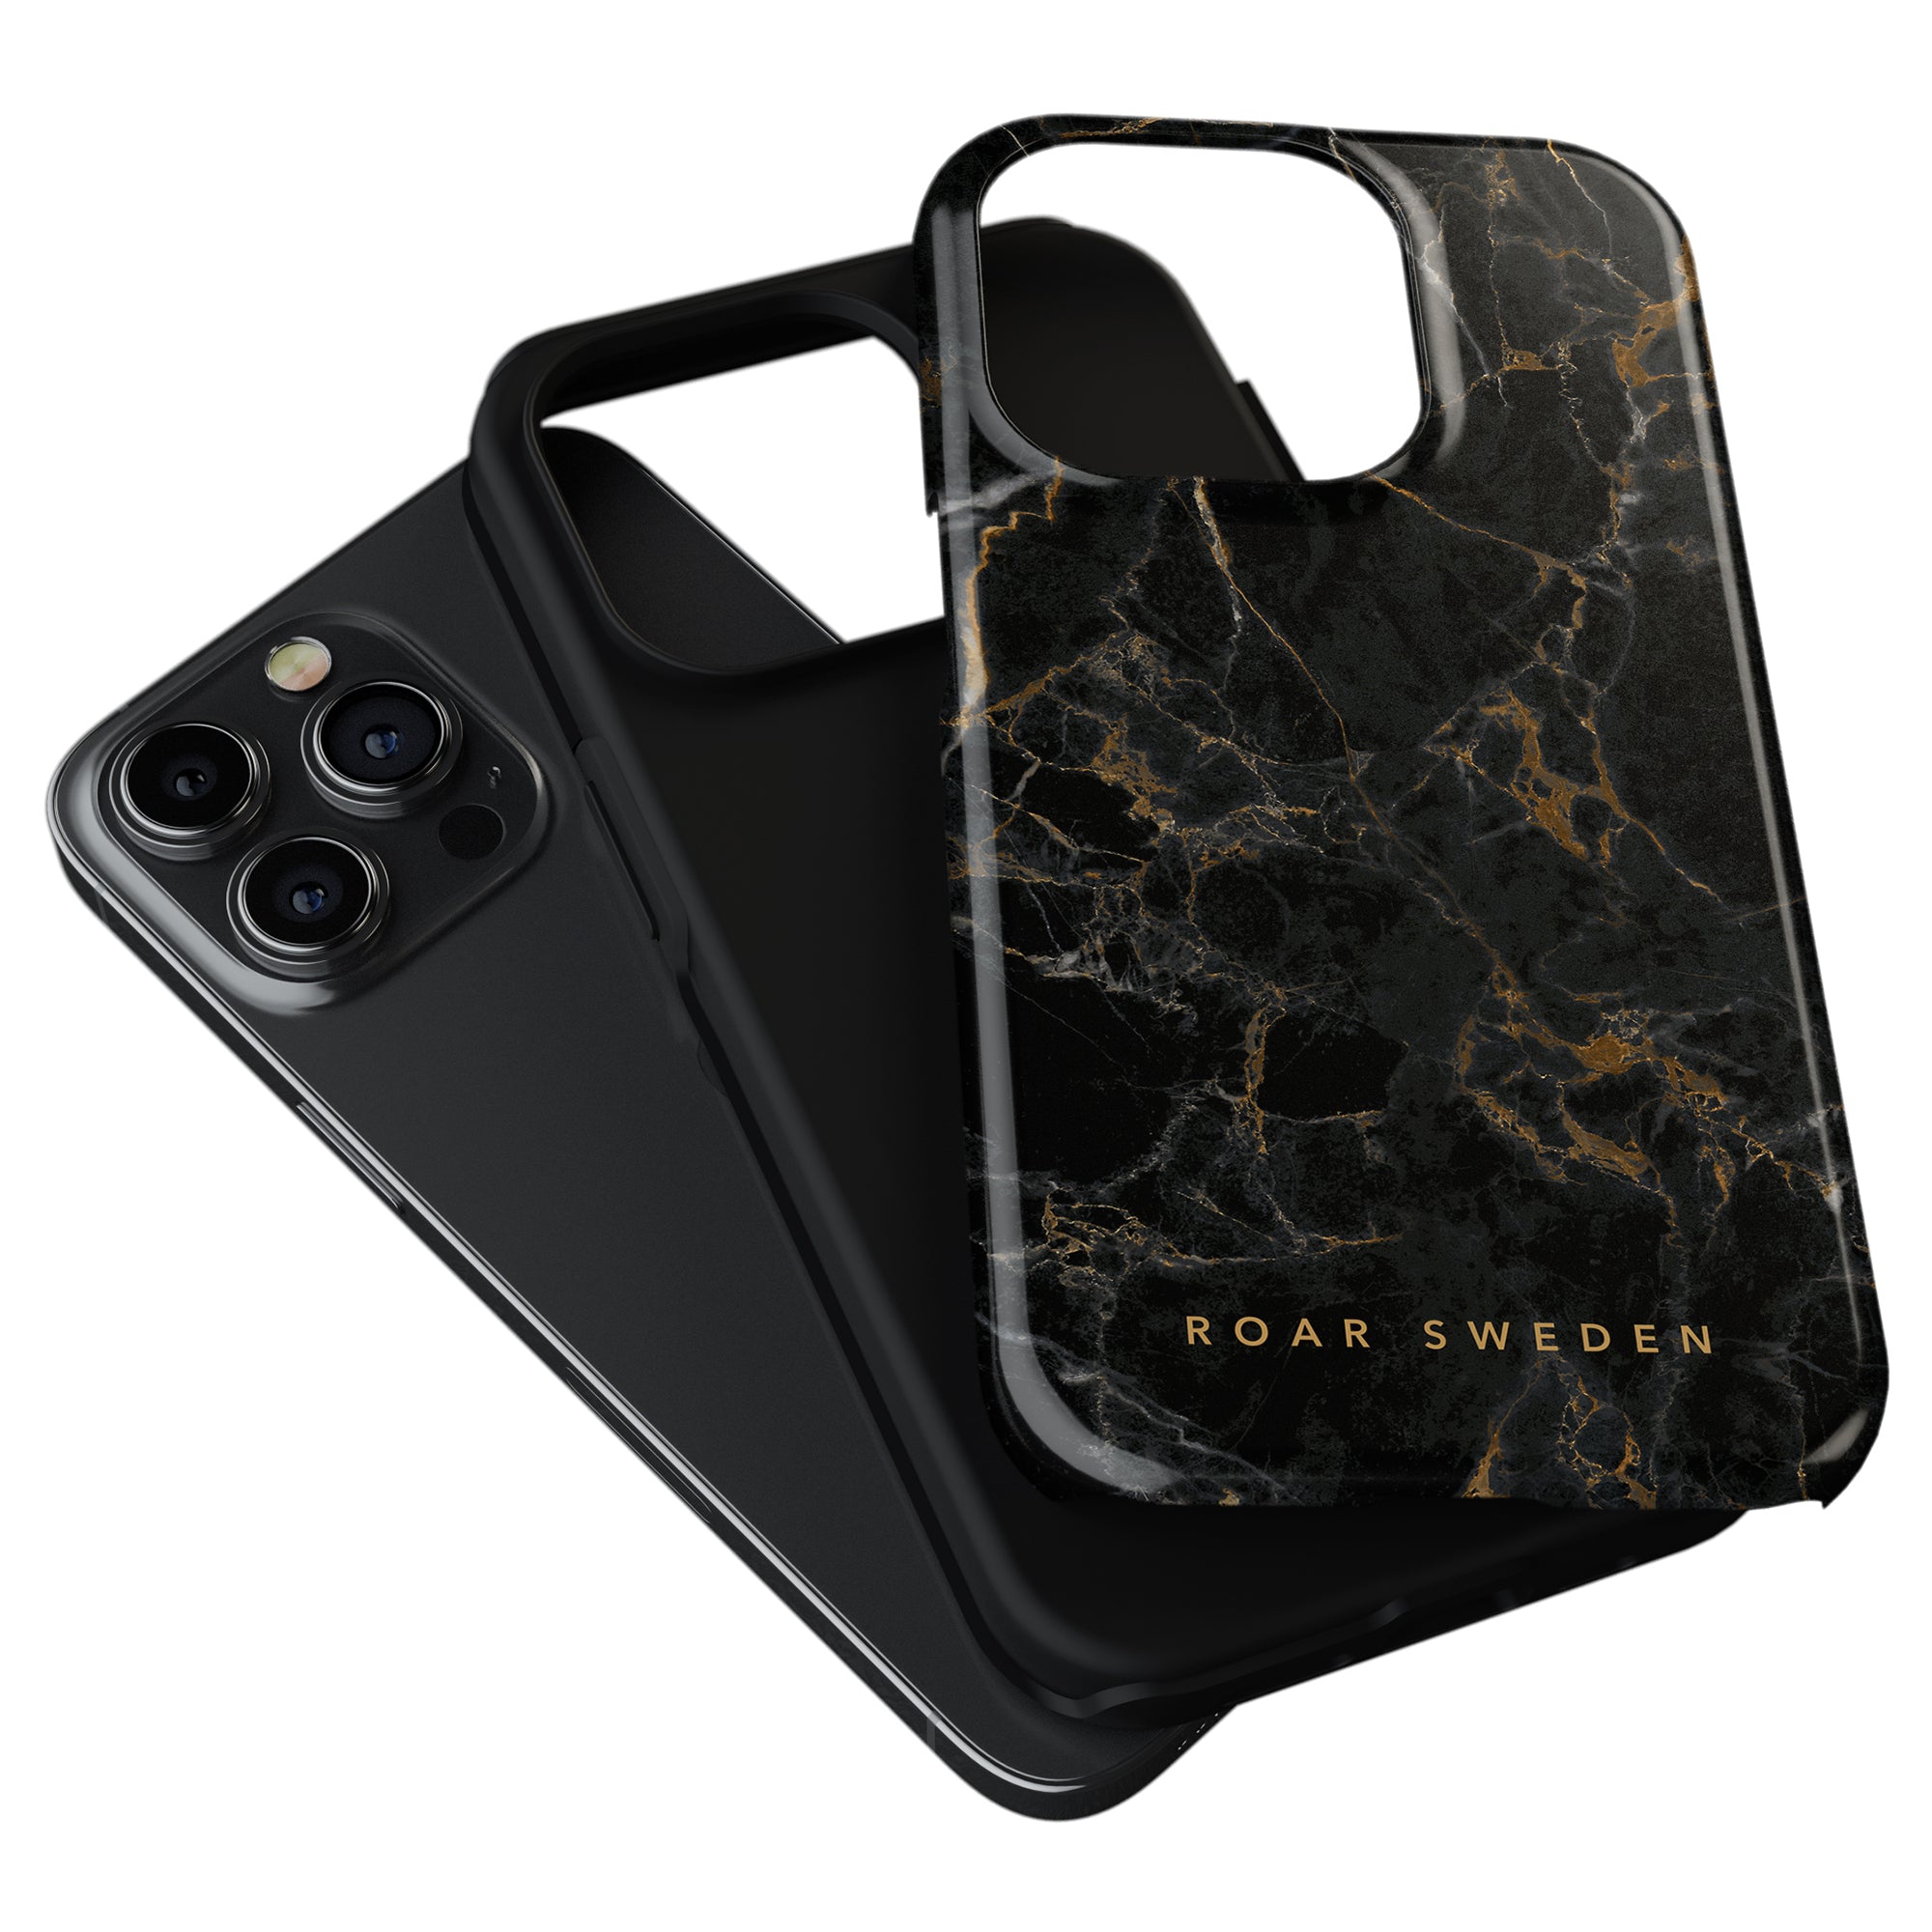 Ett modernt designat Portoro - Tough Case, naturens elegans, för iPhone 11.